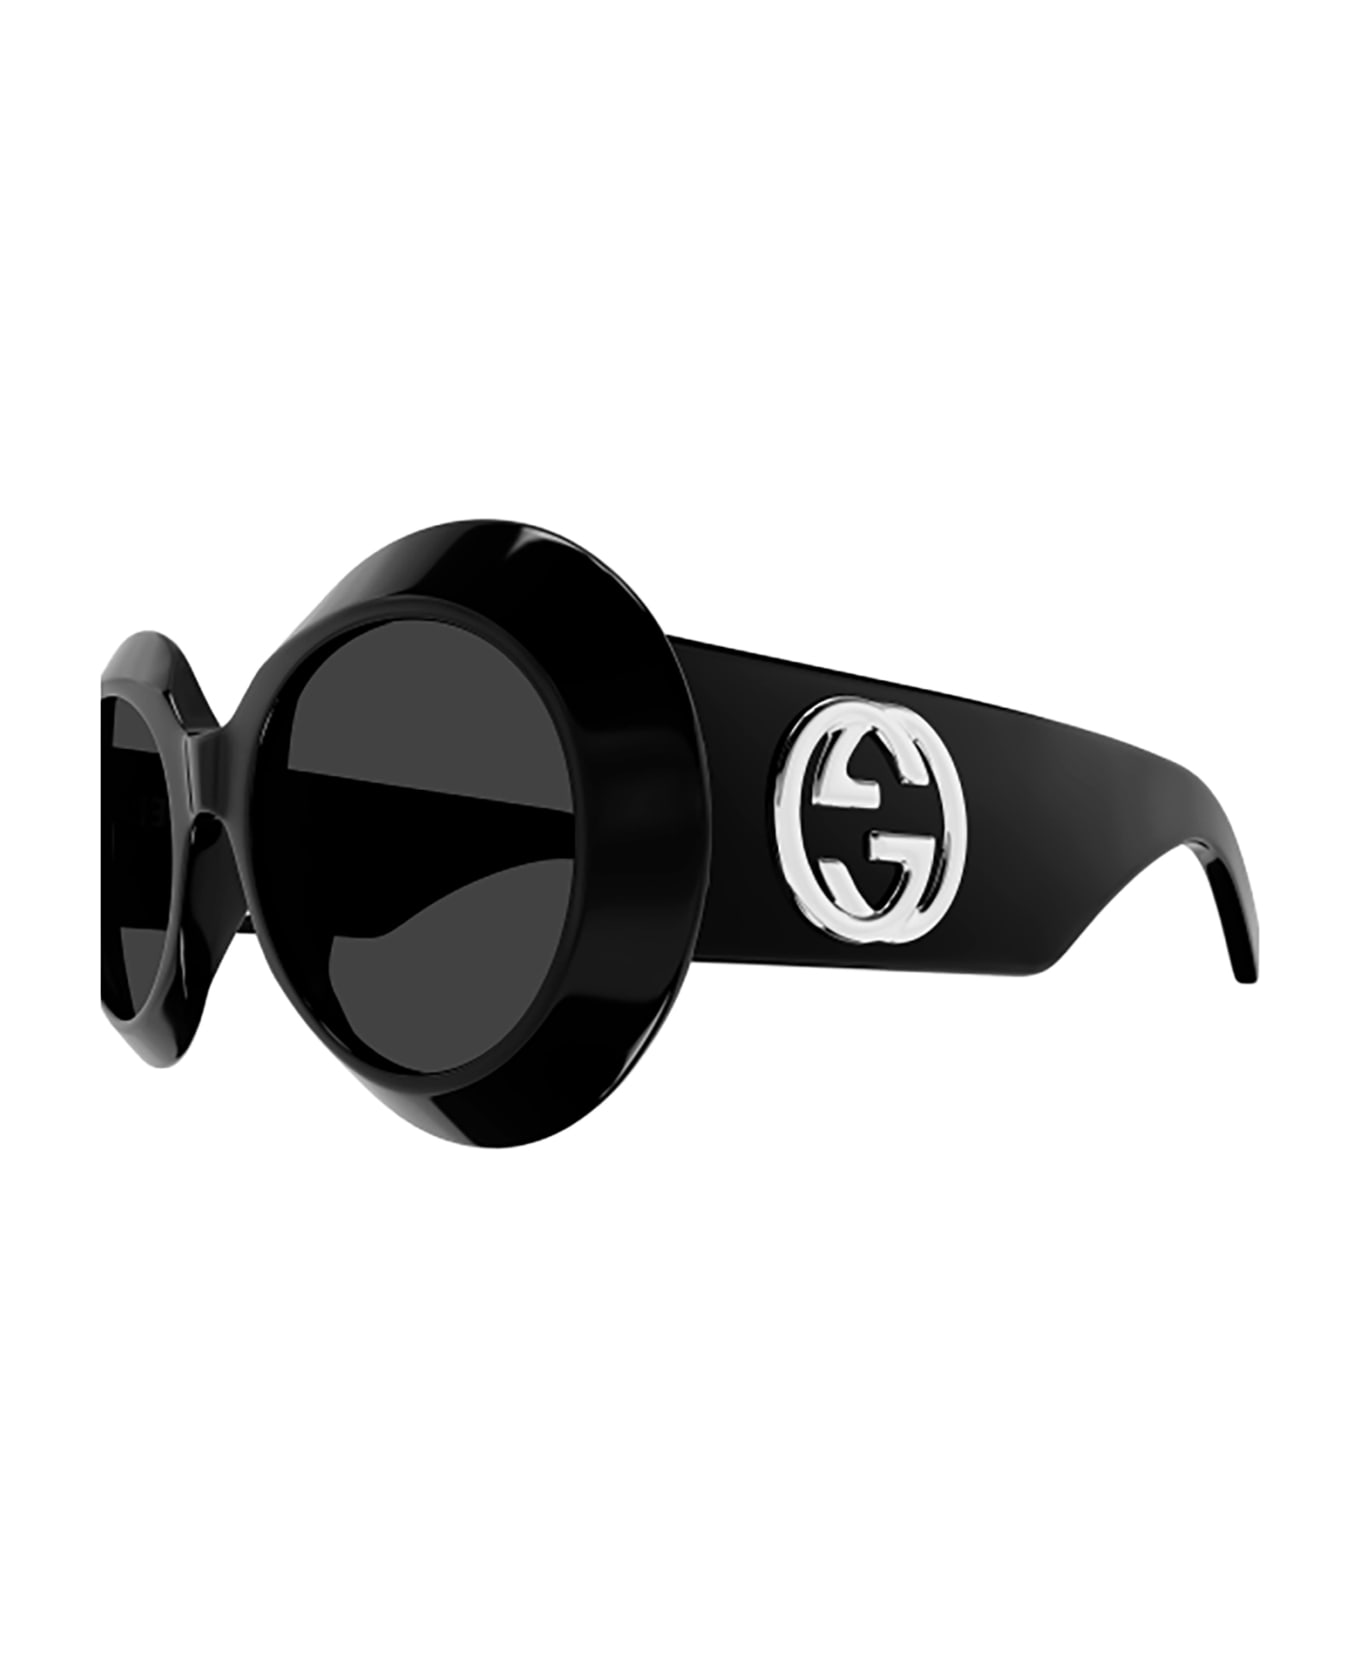 Gucci Eyewear GG1647S Sunglasses - Black Black Grey サングラス